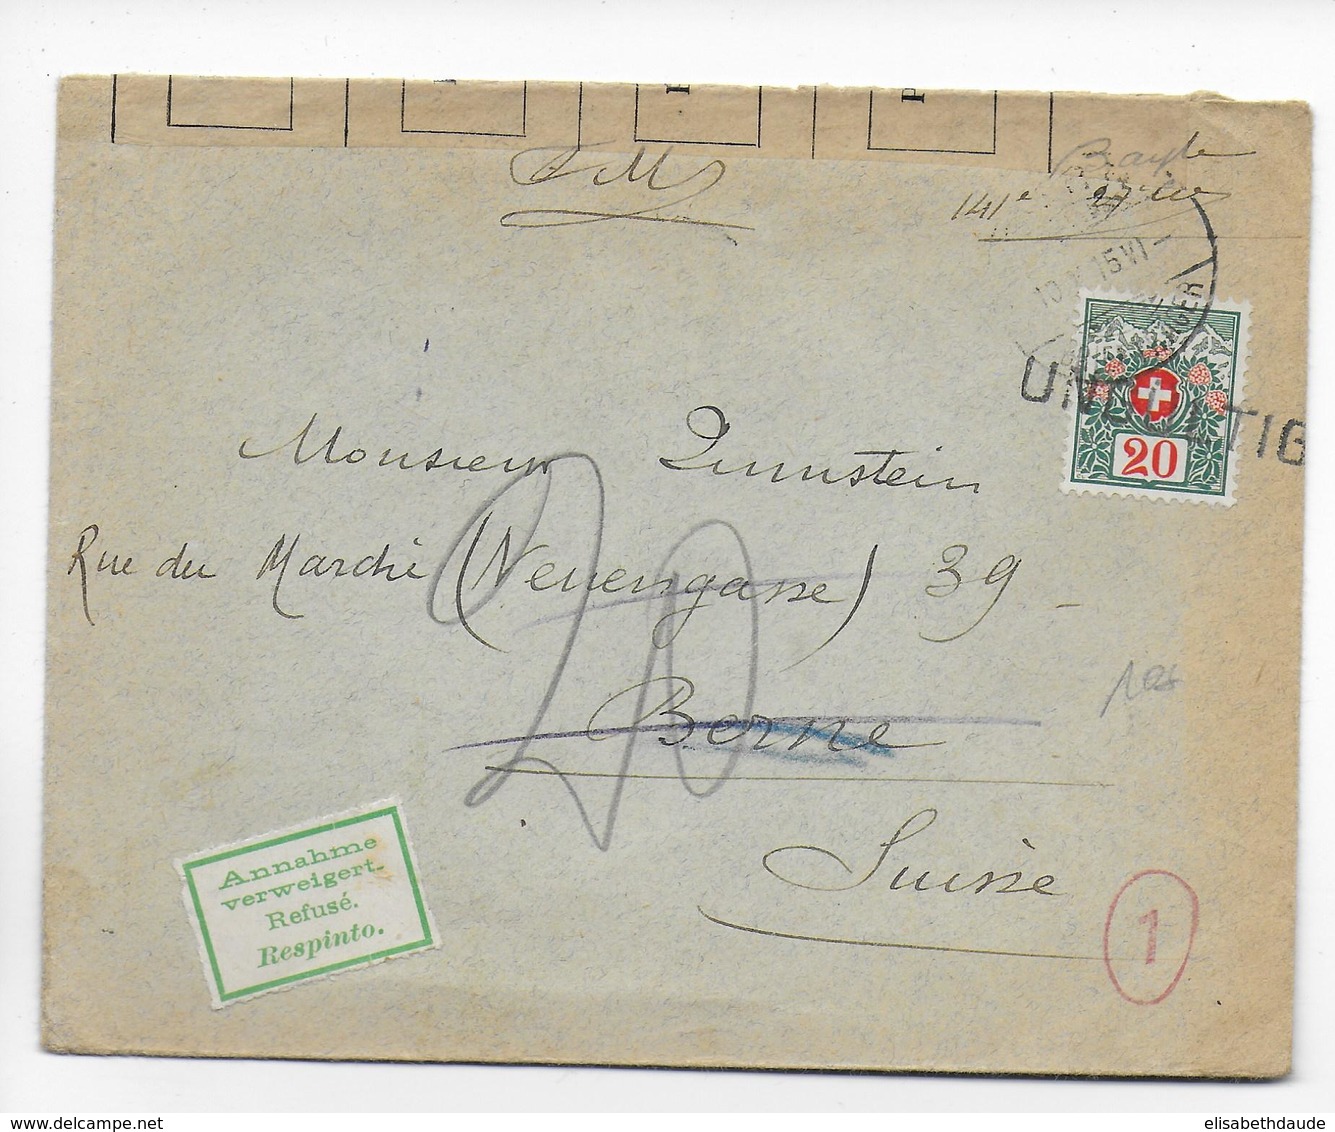 1915 - ENVELOPPE FM Du 141°RI CENSUREE => BERN (SUISSE) SANS COMPLEMENT =>TAXE => REFUSEE => UNGÜLTIG (ANNULATION) - Poststempel